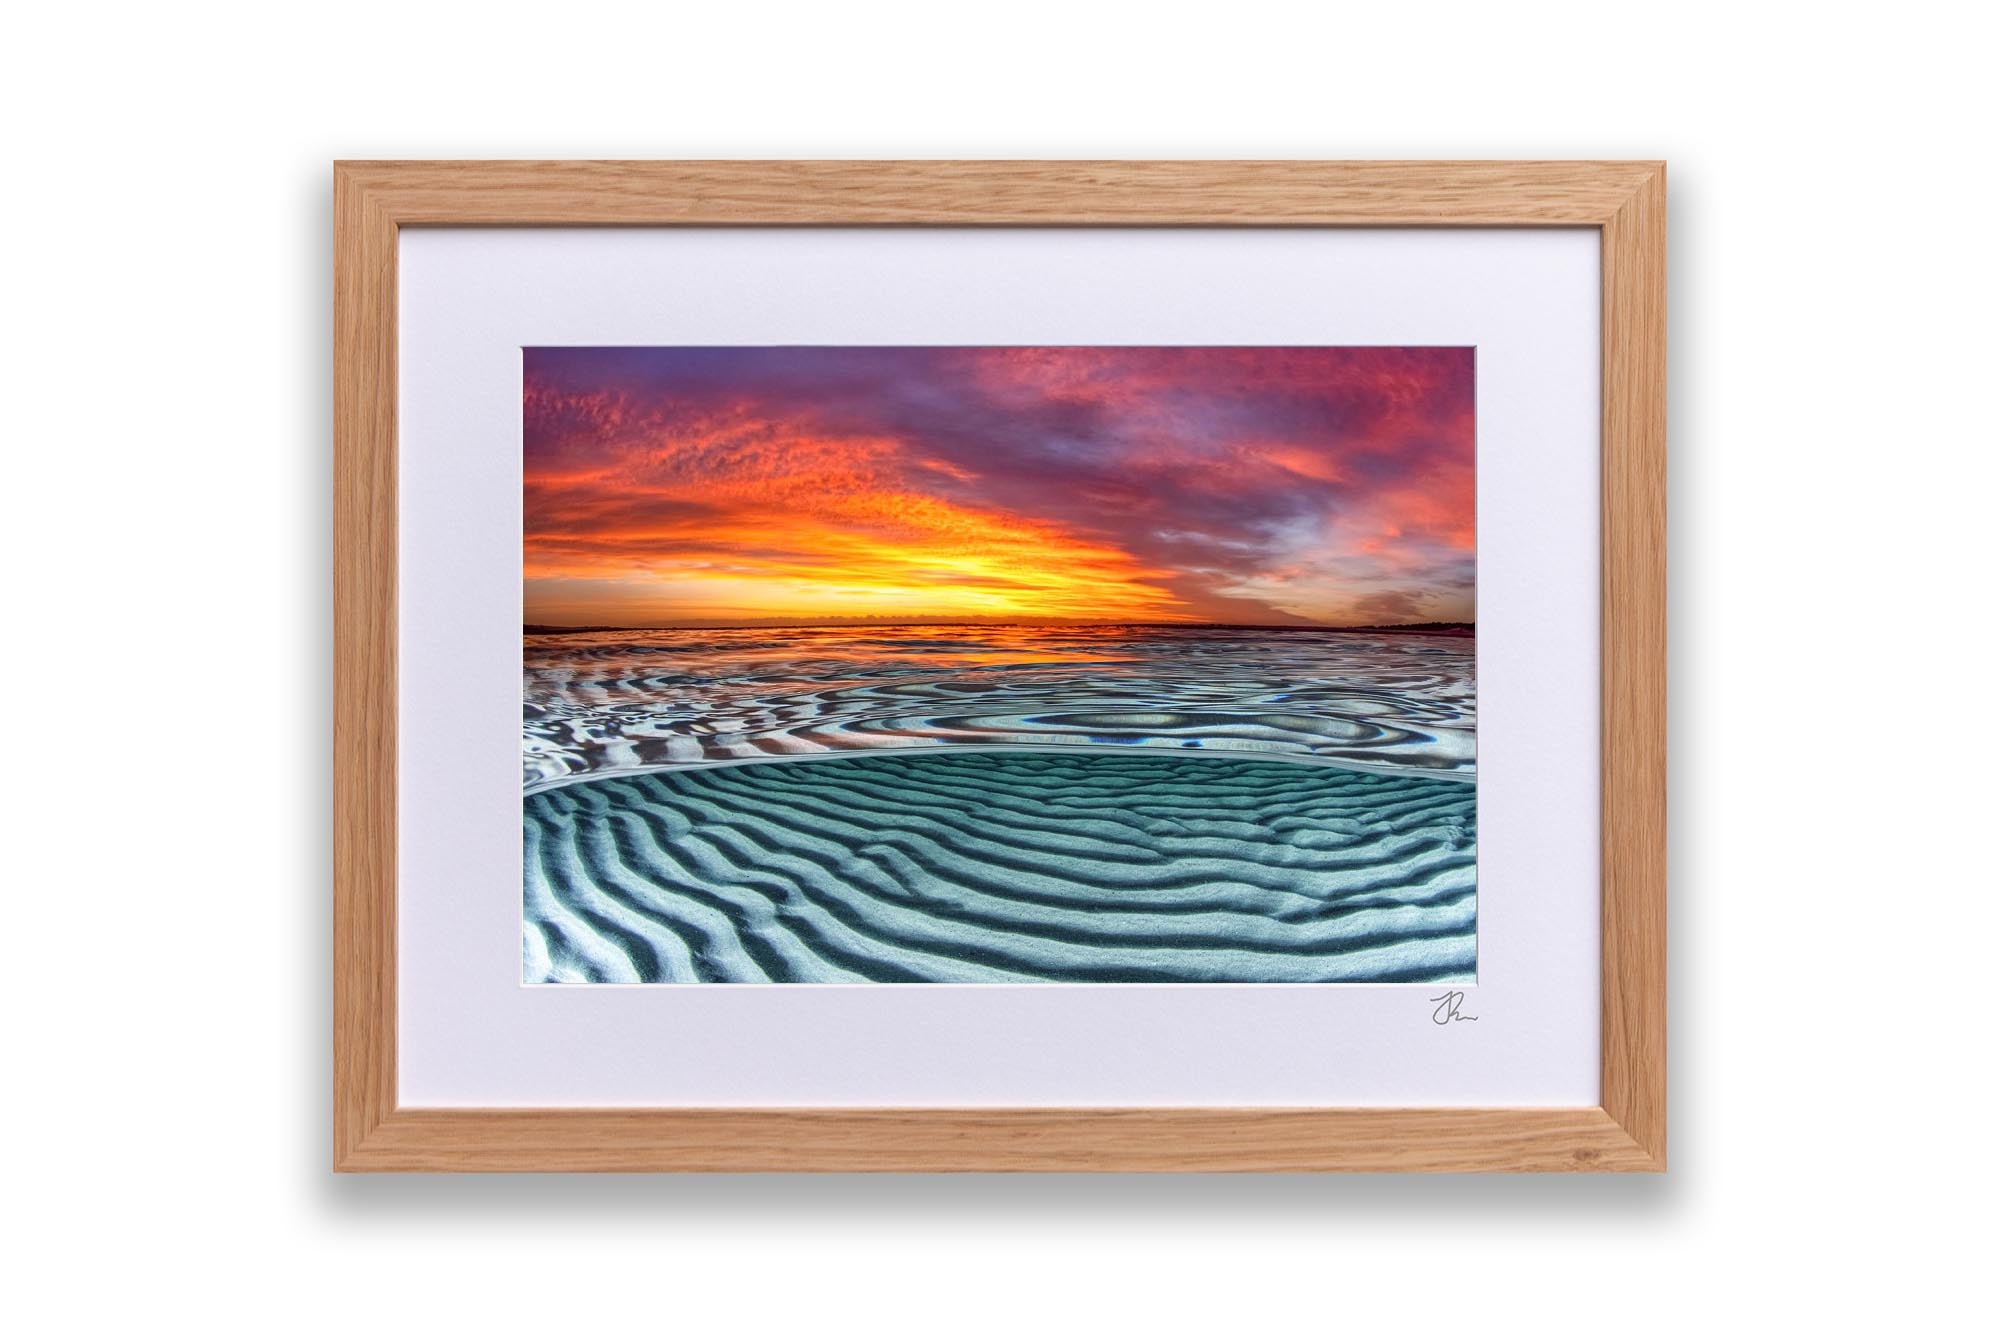 Sunrise Colours | Moona Moona Creek | Jervis Bay